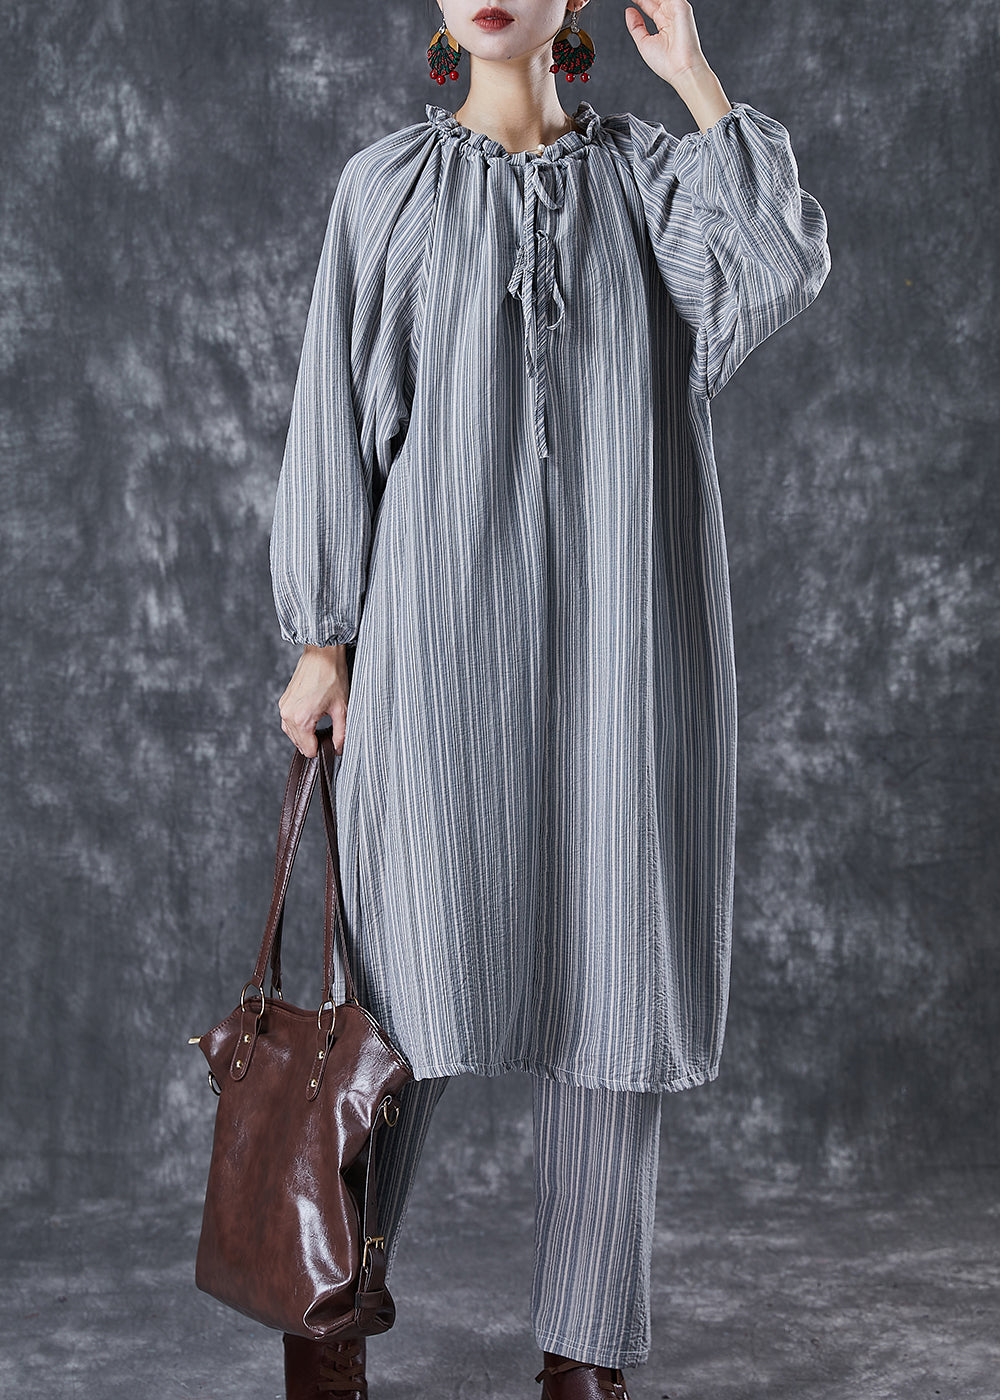 Organic Grey Ruffled Striped Cotton Dress Two Piece Suit Set Fall